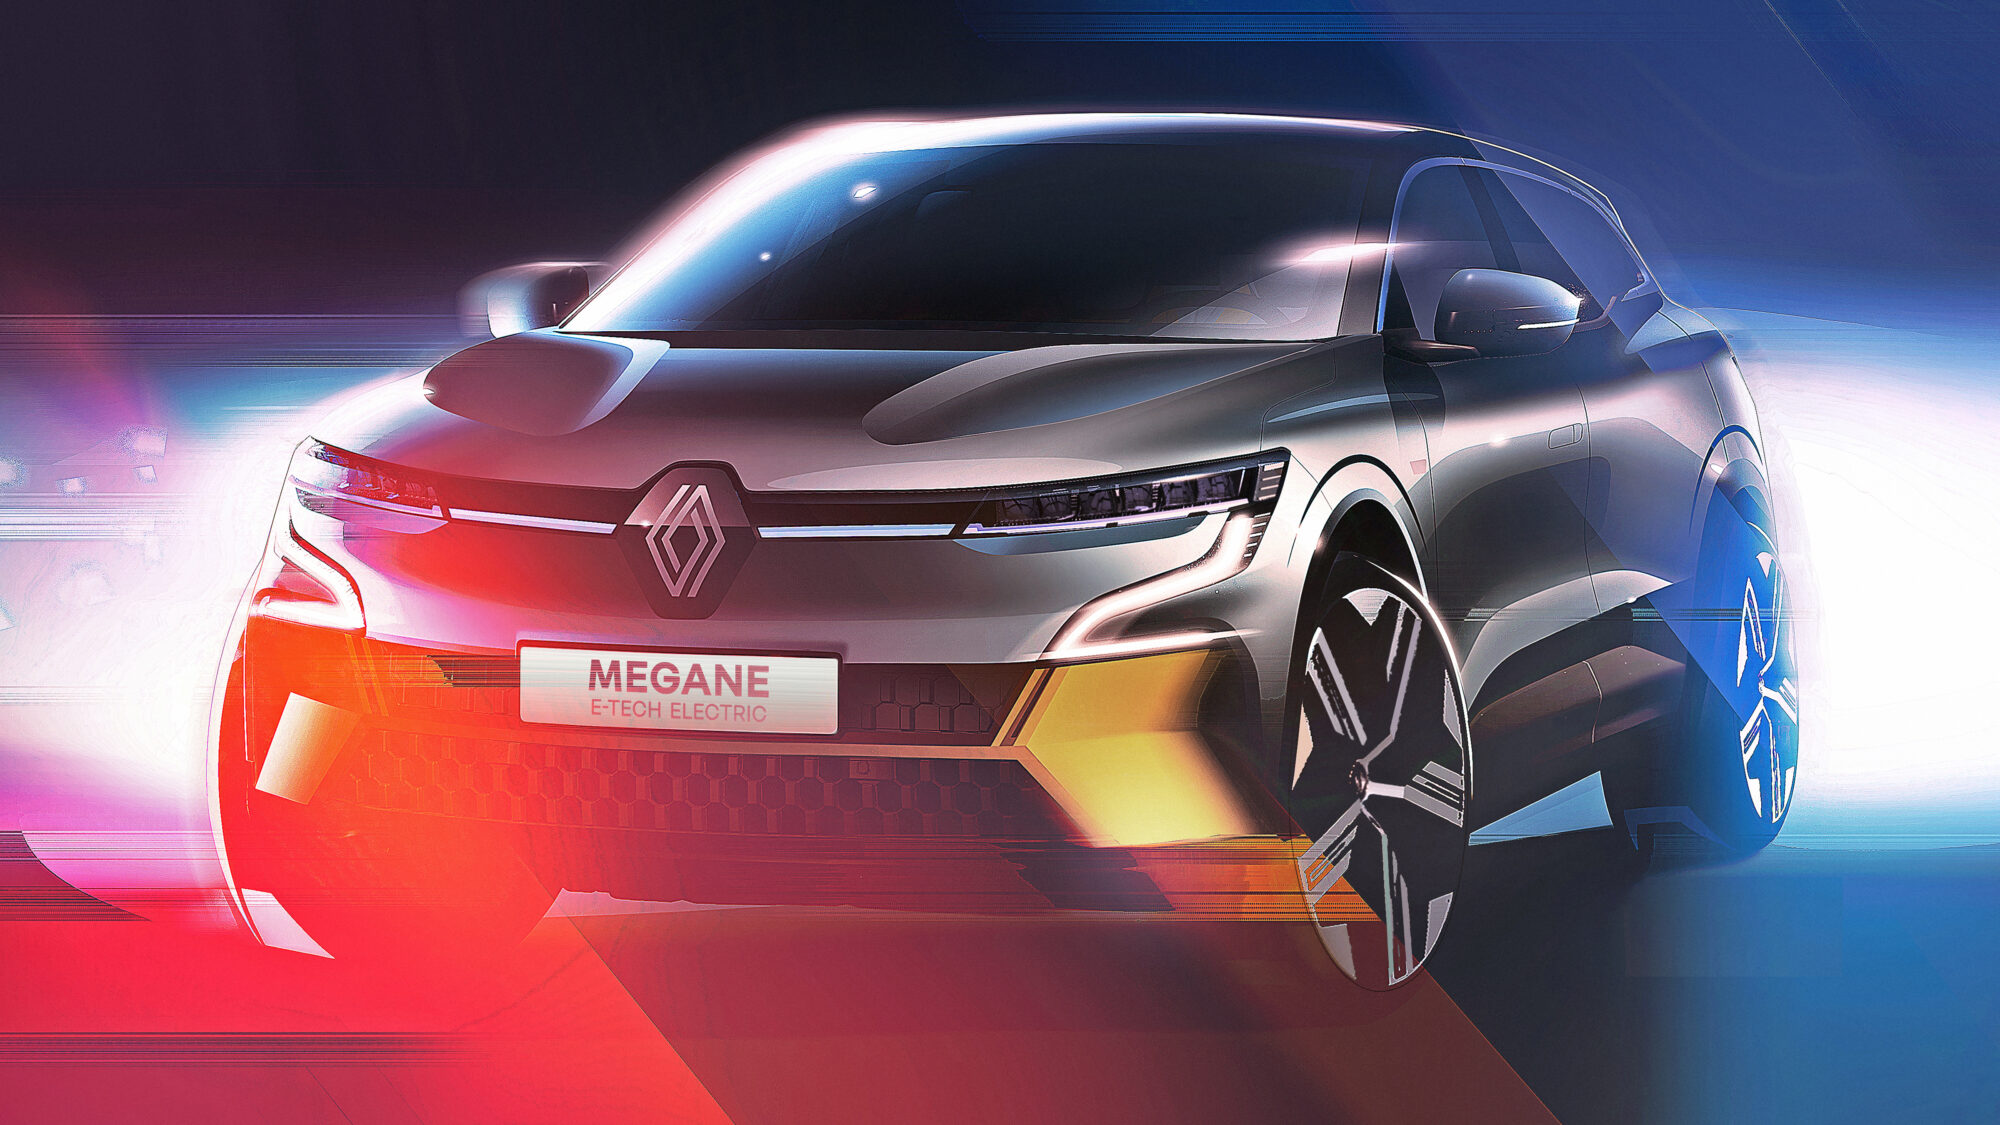 2021 - New Renault Mégane E-TECH Electric - Design